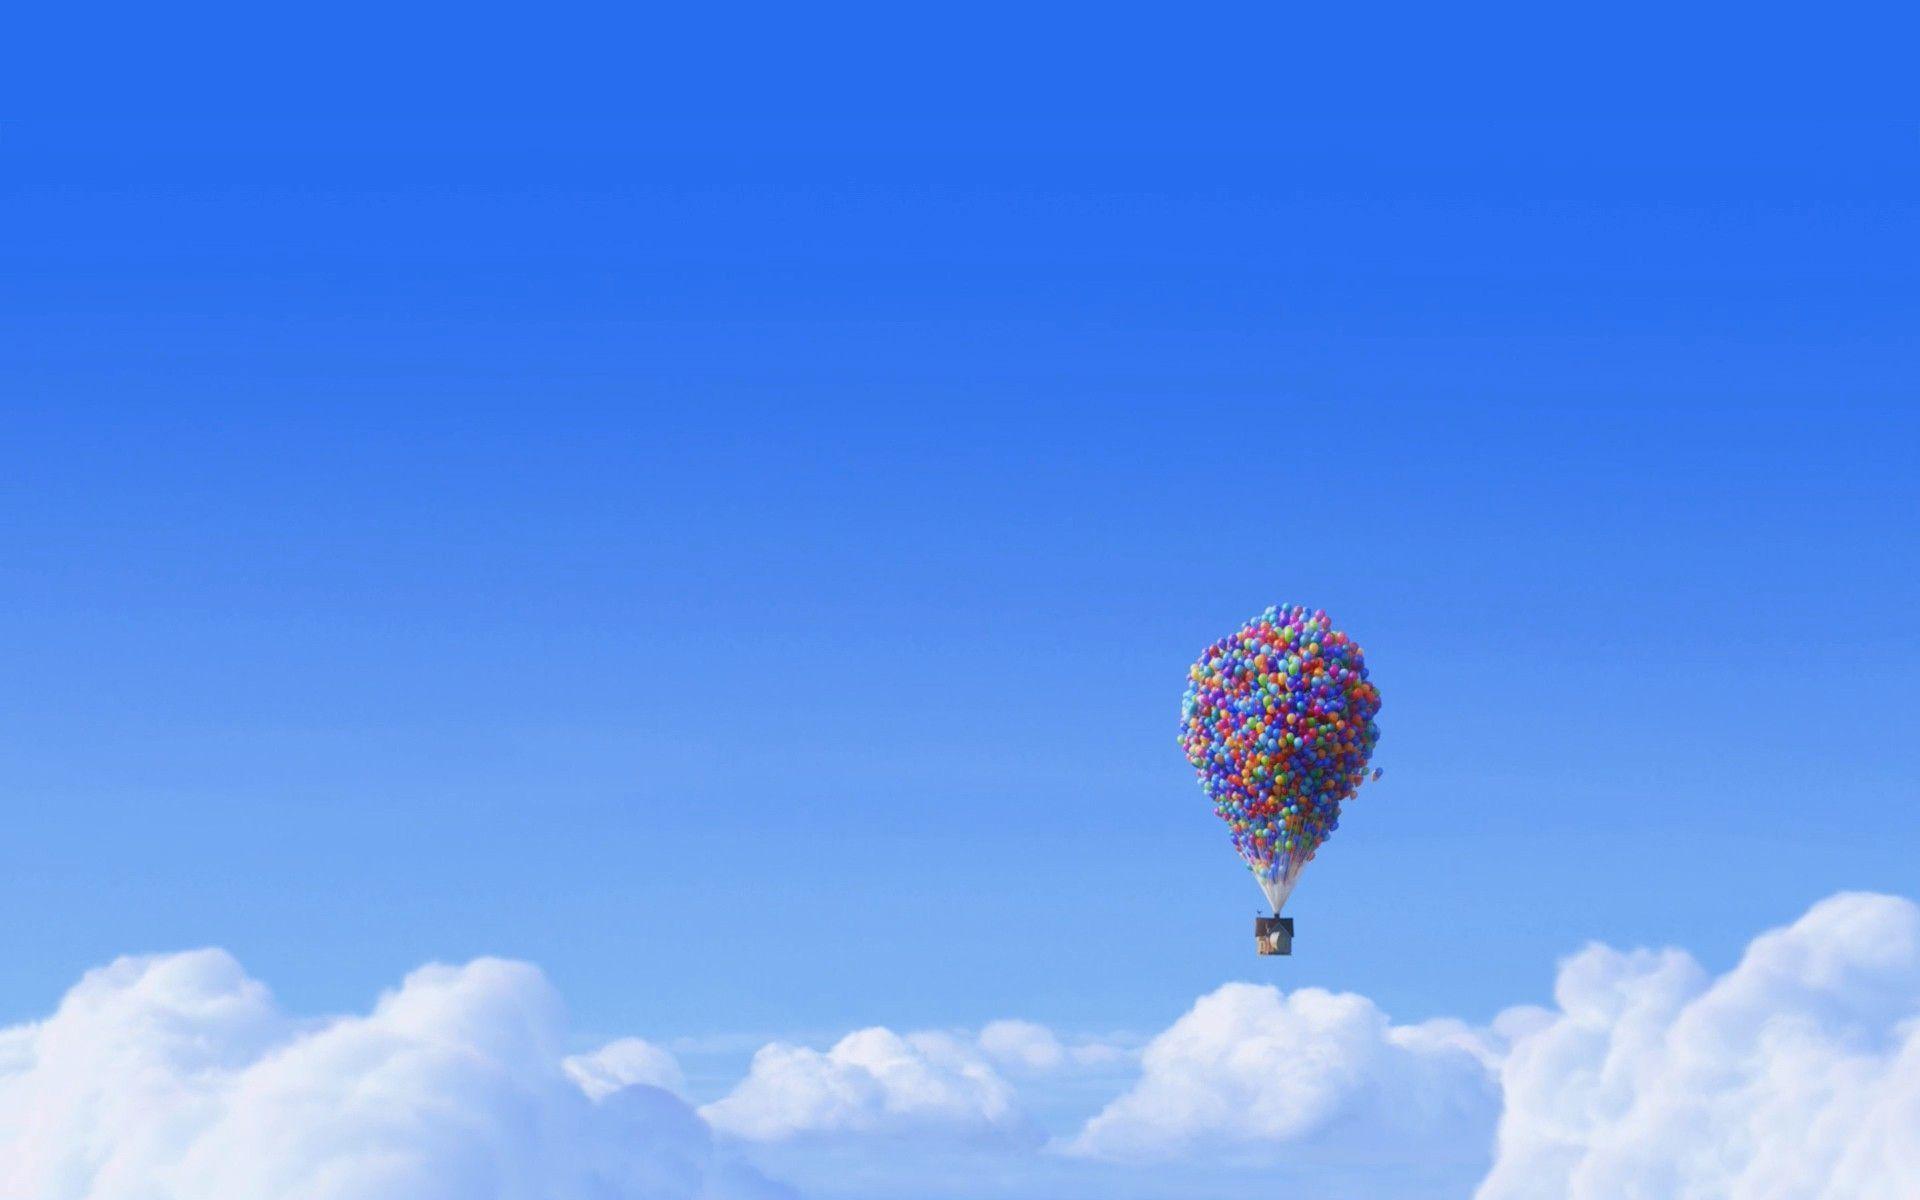 Disney Pixar Wallpaper Hd Images amp Pictures   Becuo